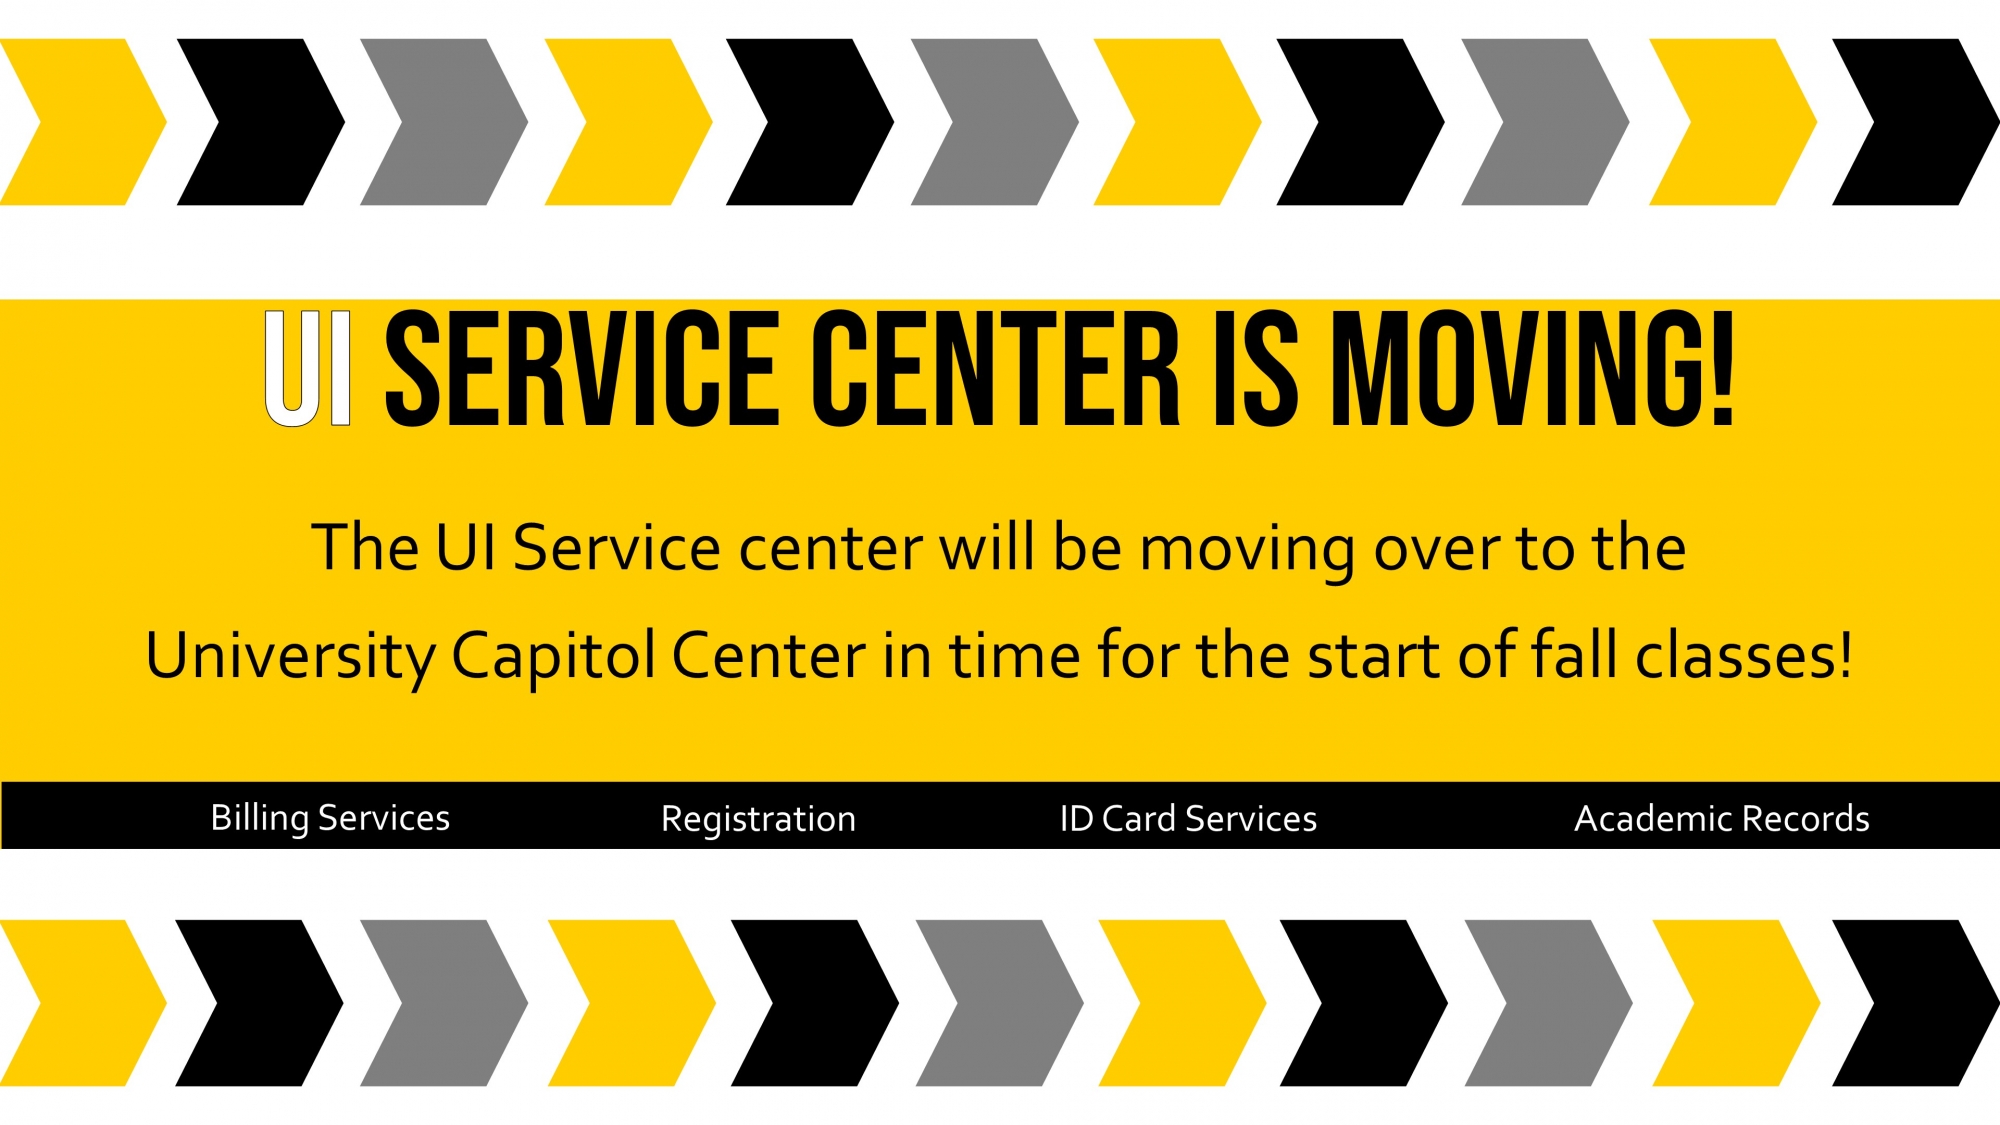 UI Service Center Moving